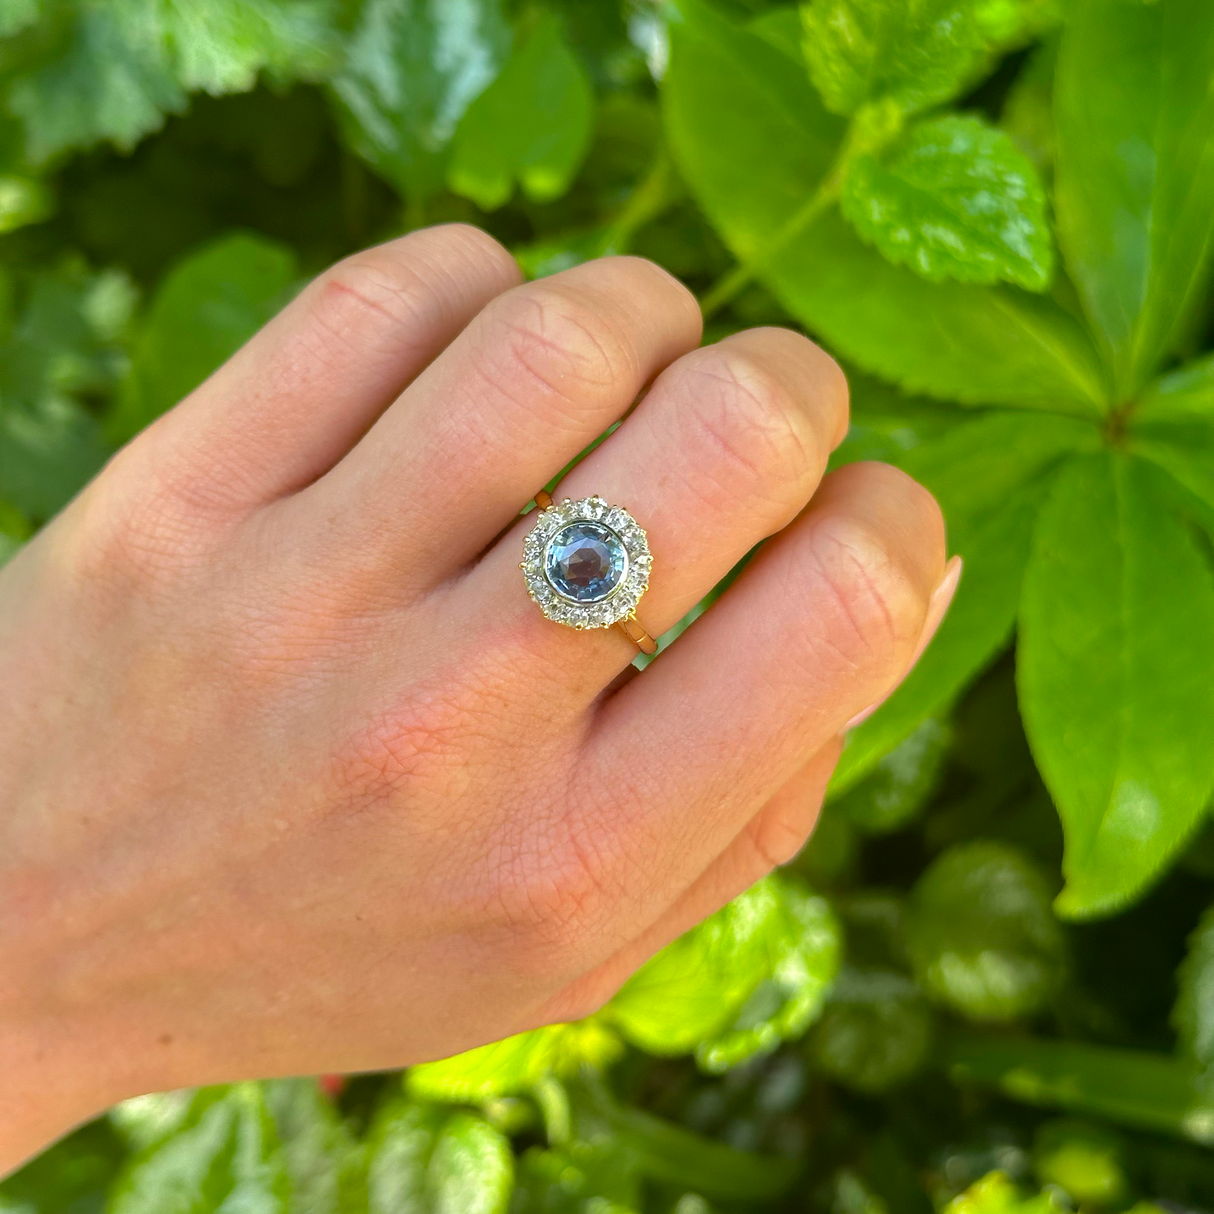 Vintage, cornflower blue sapphire & diamond cluster engagement ring worn on hand. 